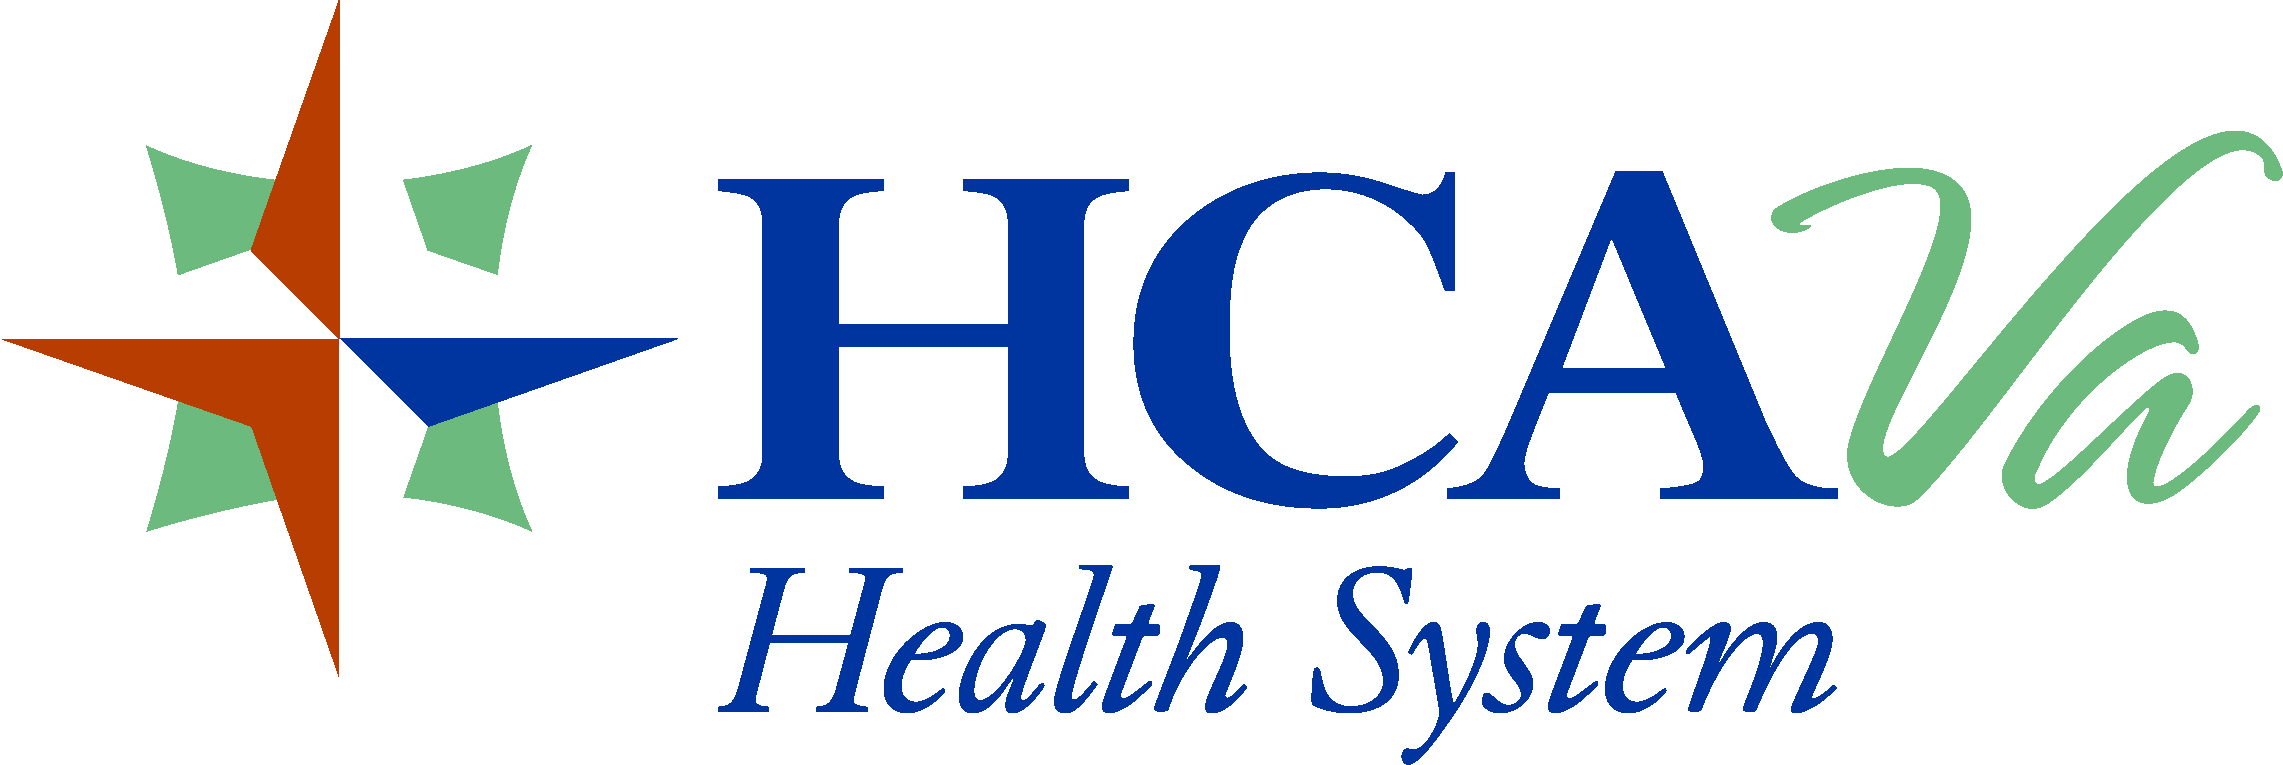 HCAVA Health System